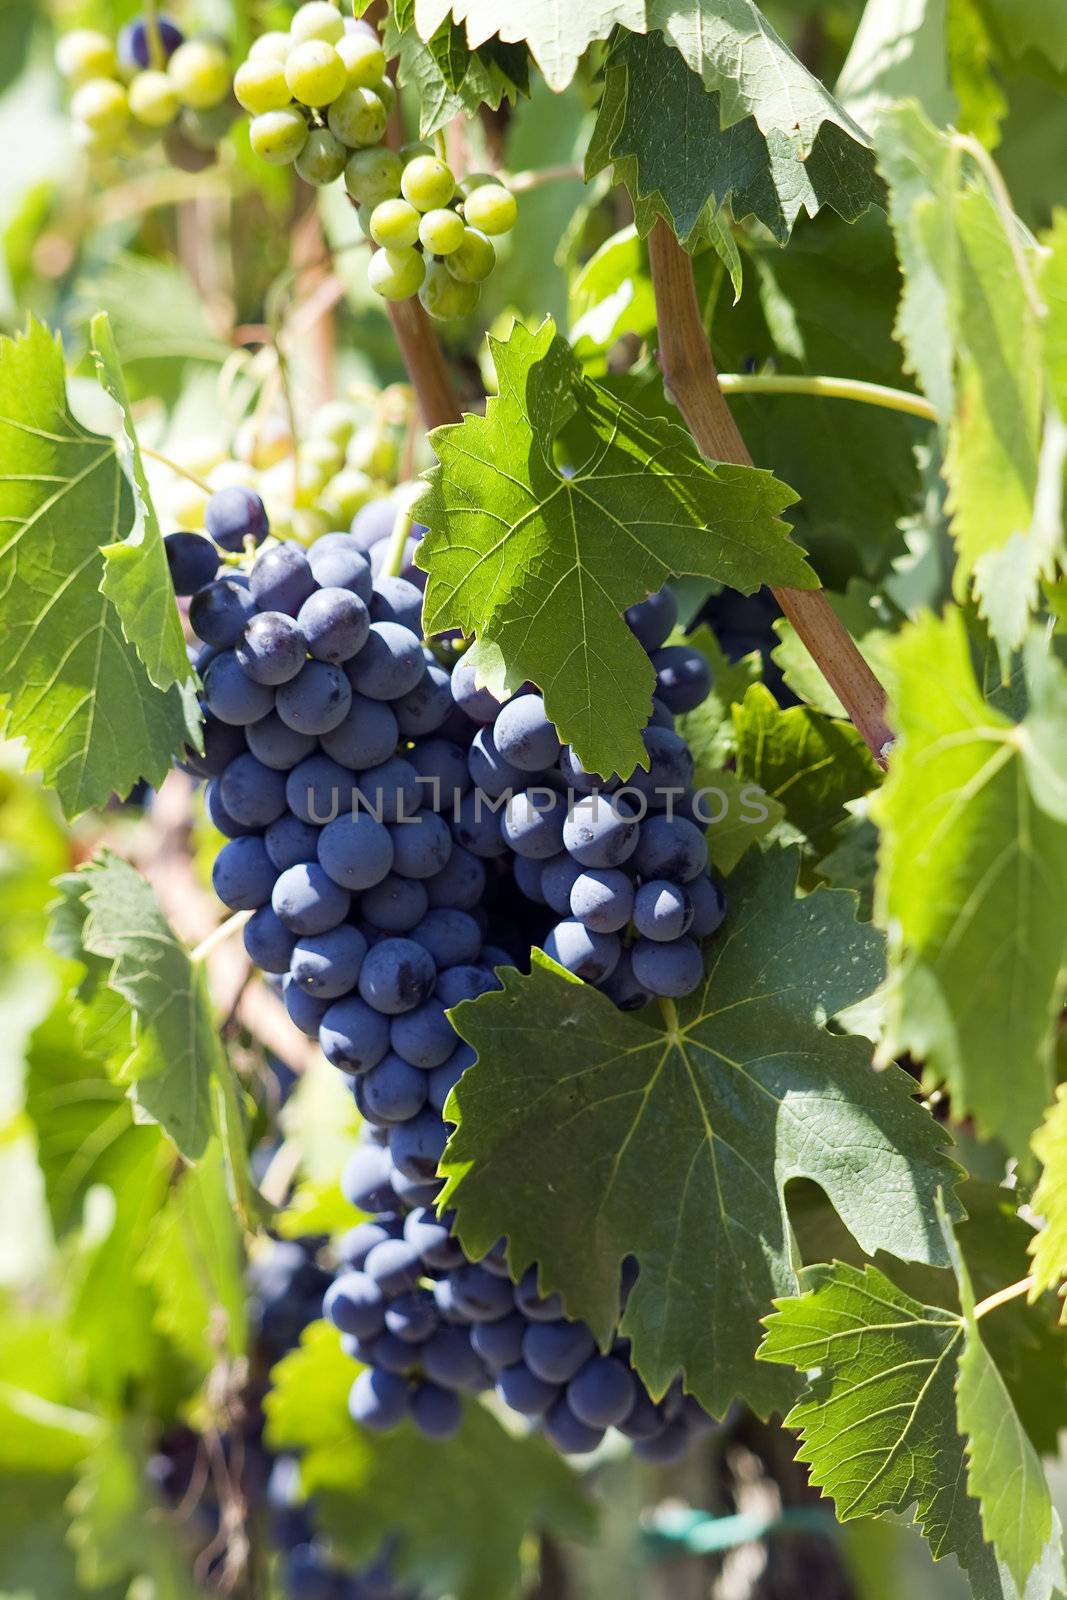 tuscan grapes by miradrozdowski